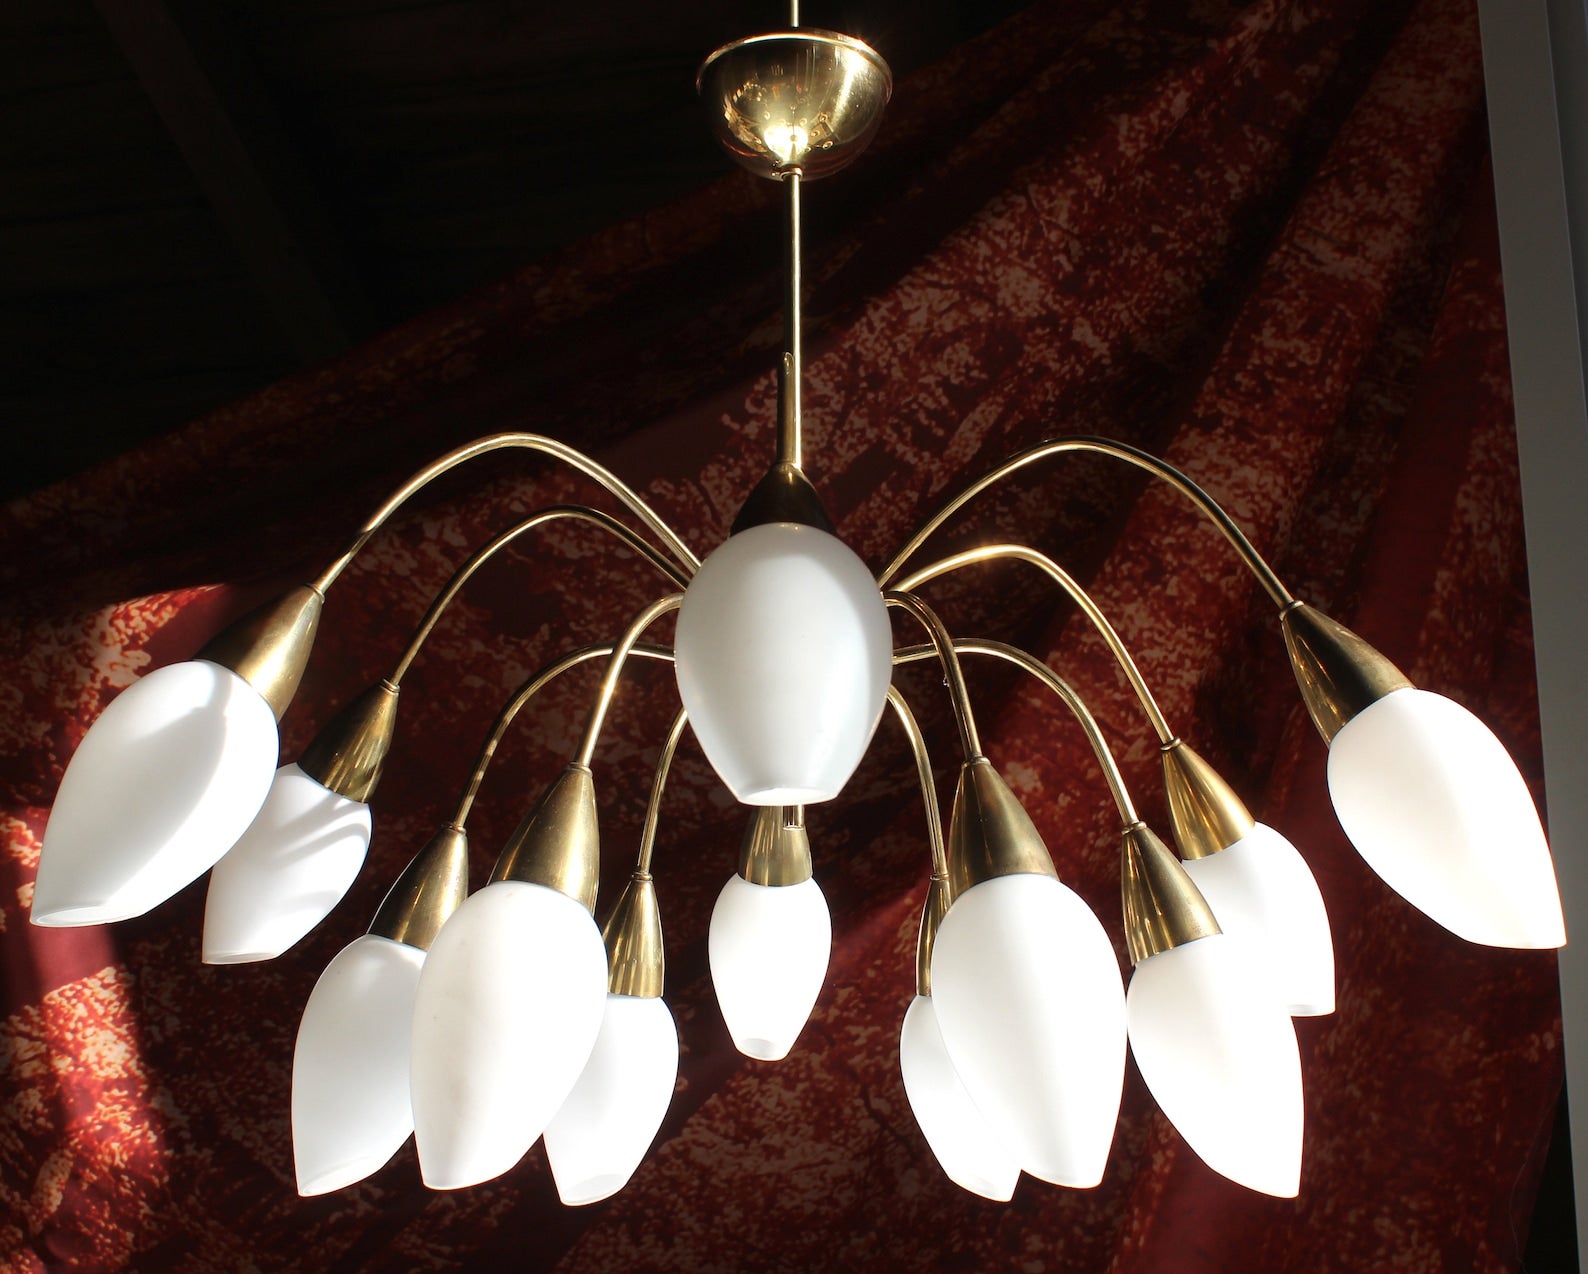 12 Lights chandelier - 1950s- stilnovo type

Polished brass & hand-blown opal glass blossoms
diameter 32